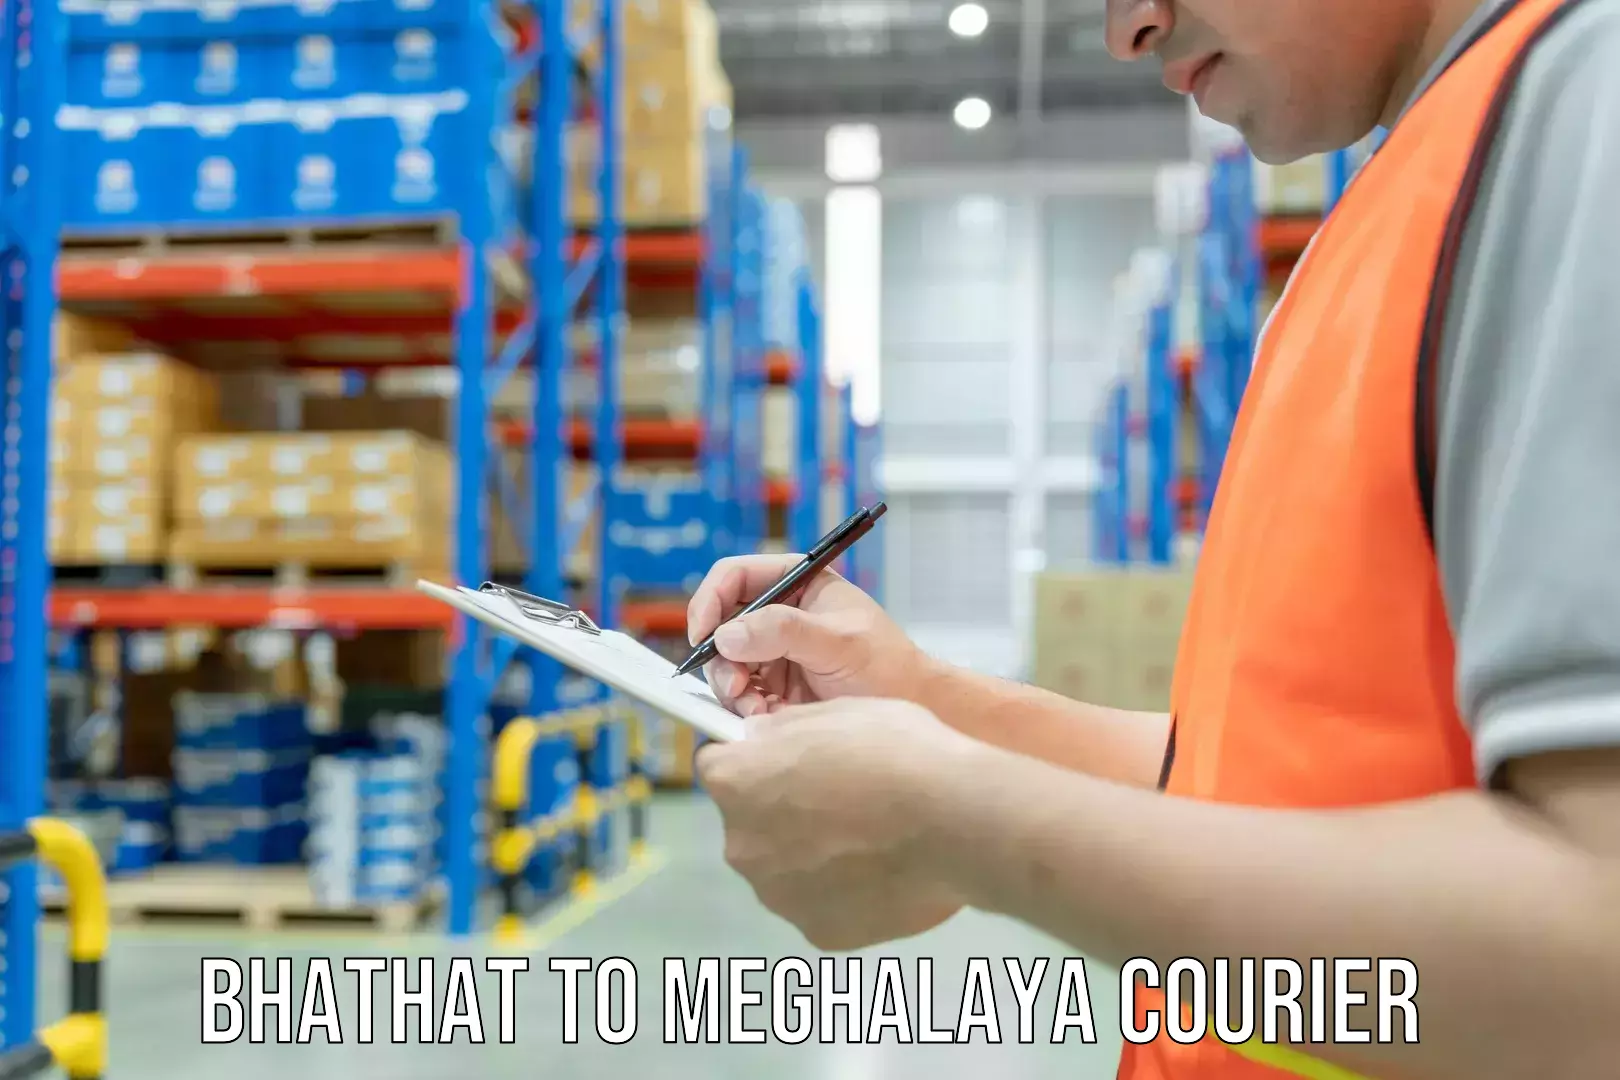 Digital courier platforms Bhathat to Meghalaya